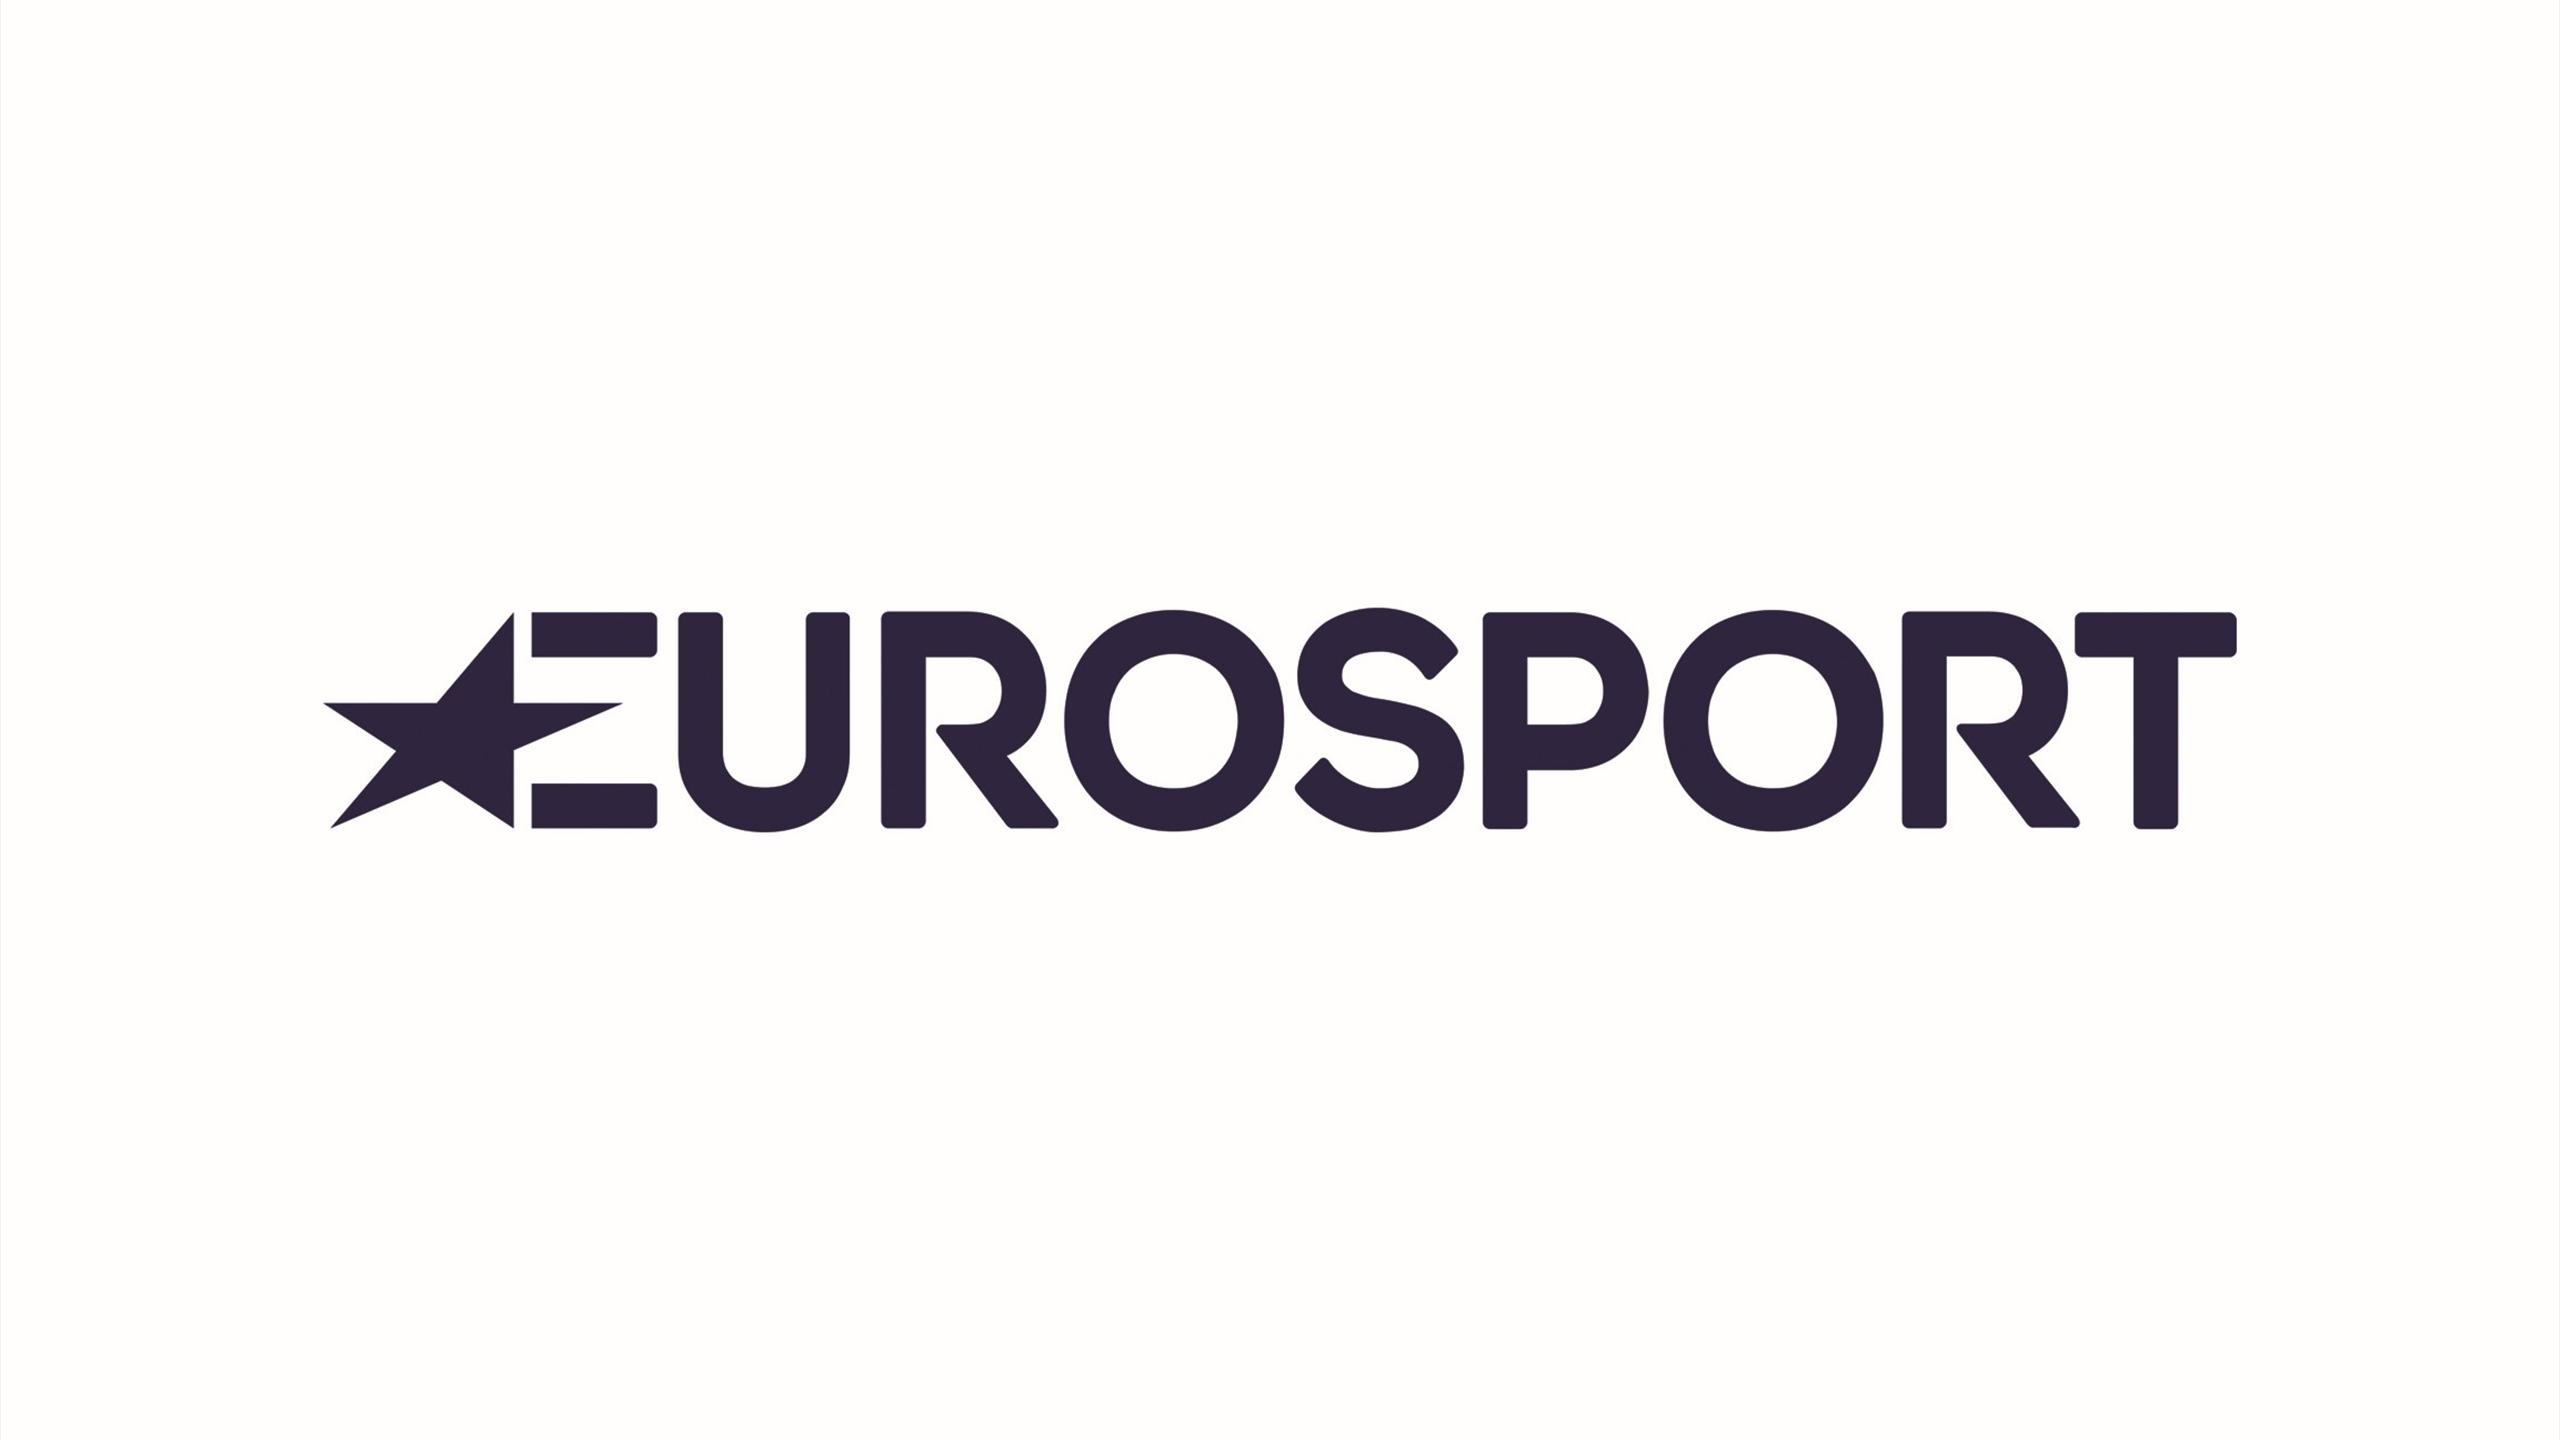 Logo de Eurosport sur un fond blanc, alternative à Rojadirecta